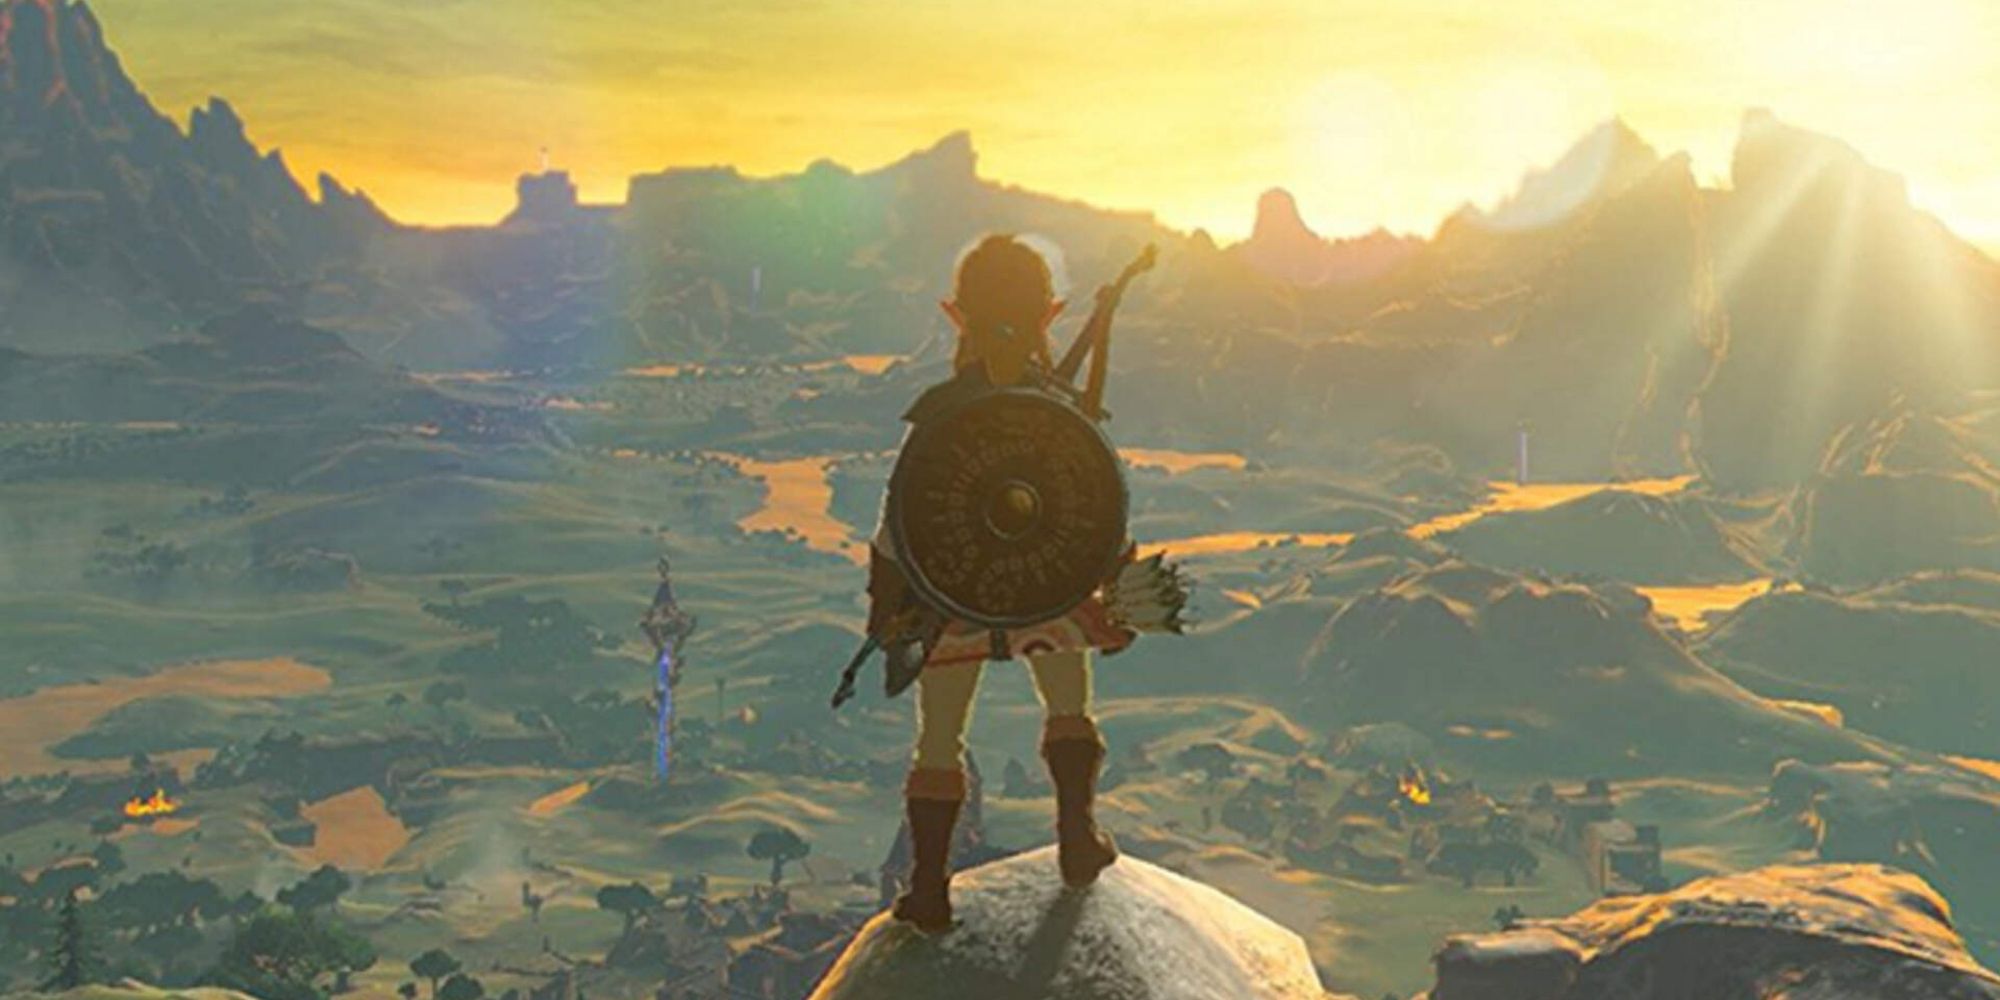 Zelda standing on top of a mountain in The Legend Of Zelda Breath Of The Wild